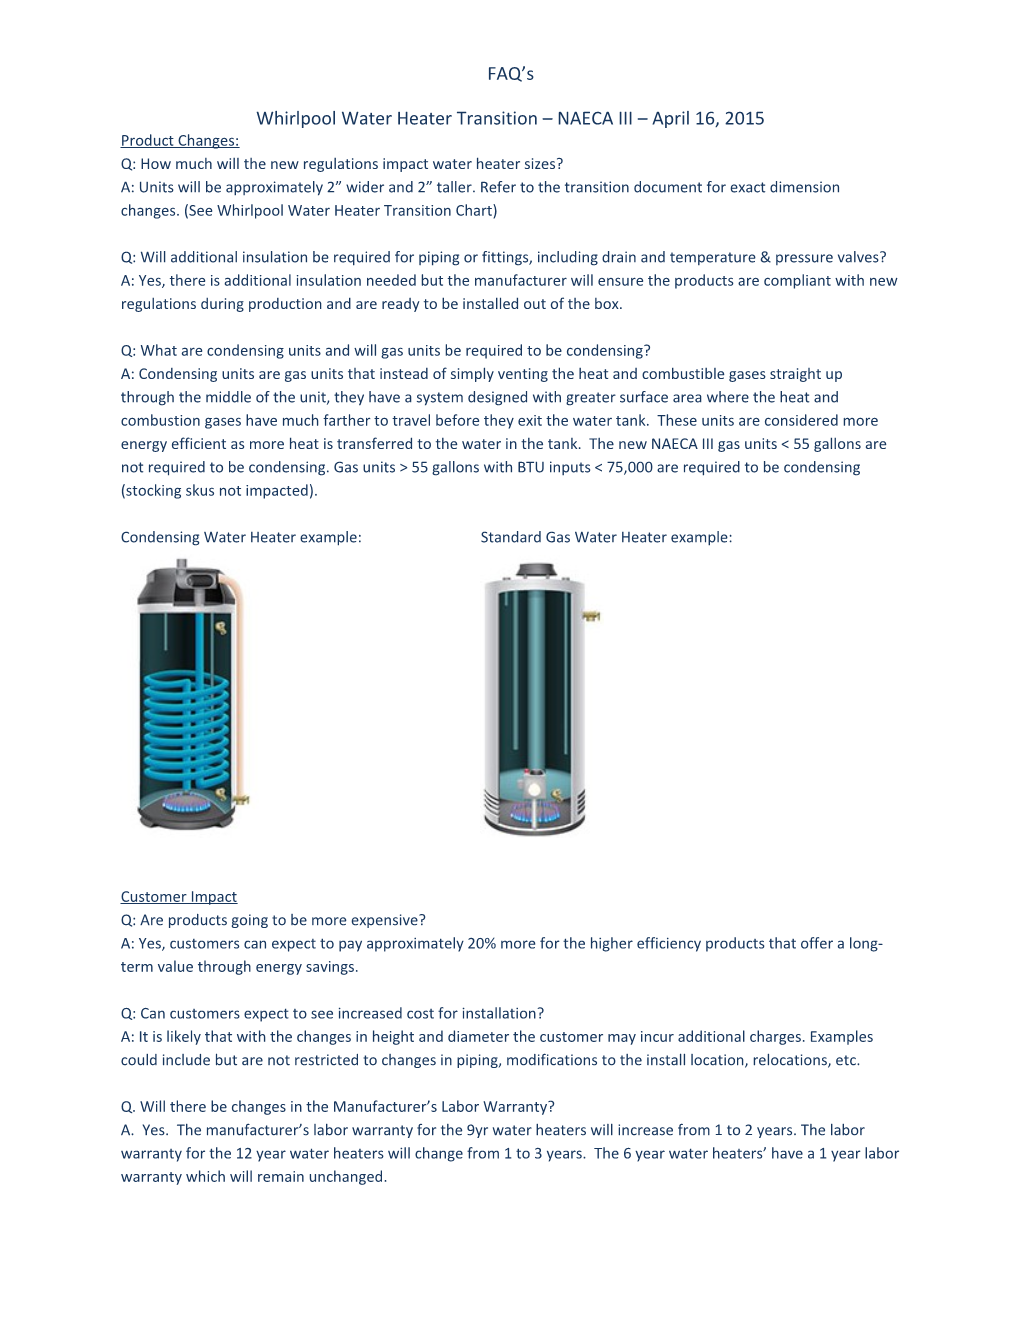 Whirlpool Water Heater Transition NAECA III April 16, 2015